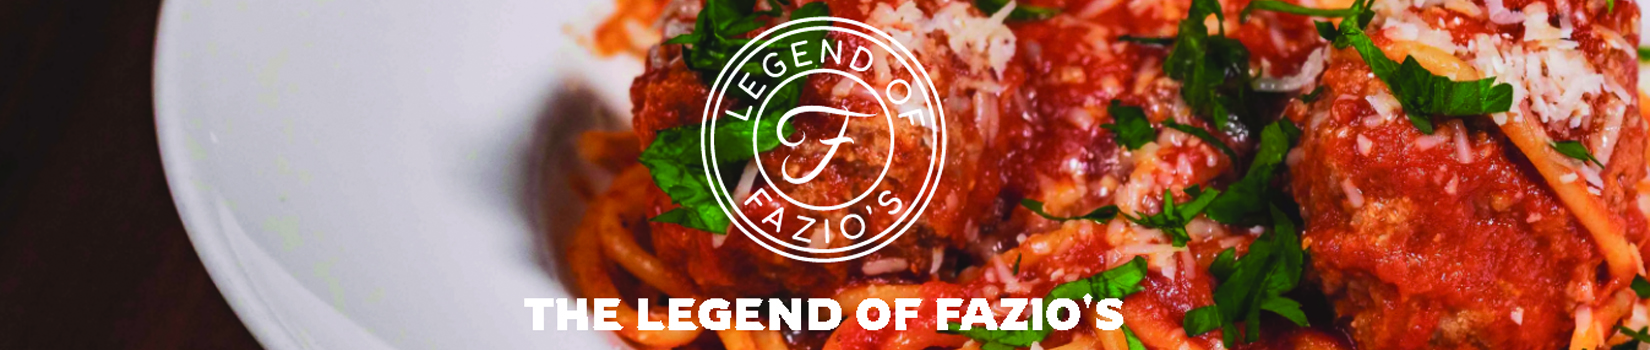 The Legend of Fazios